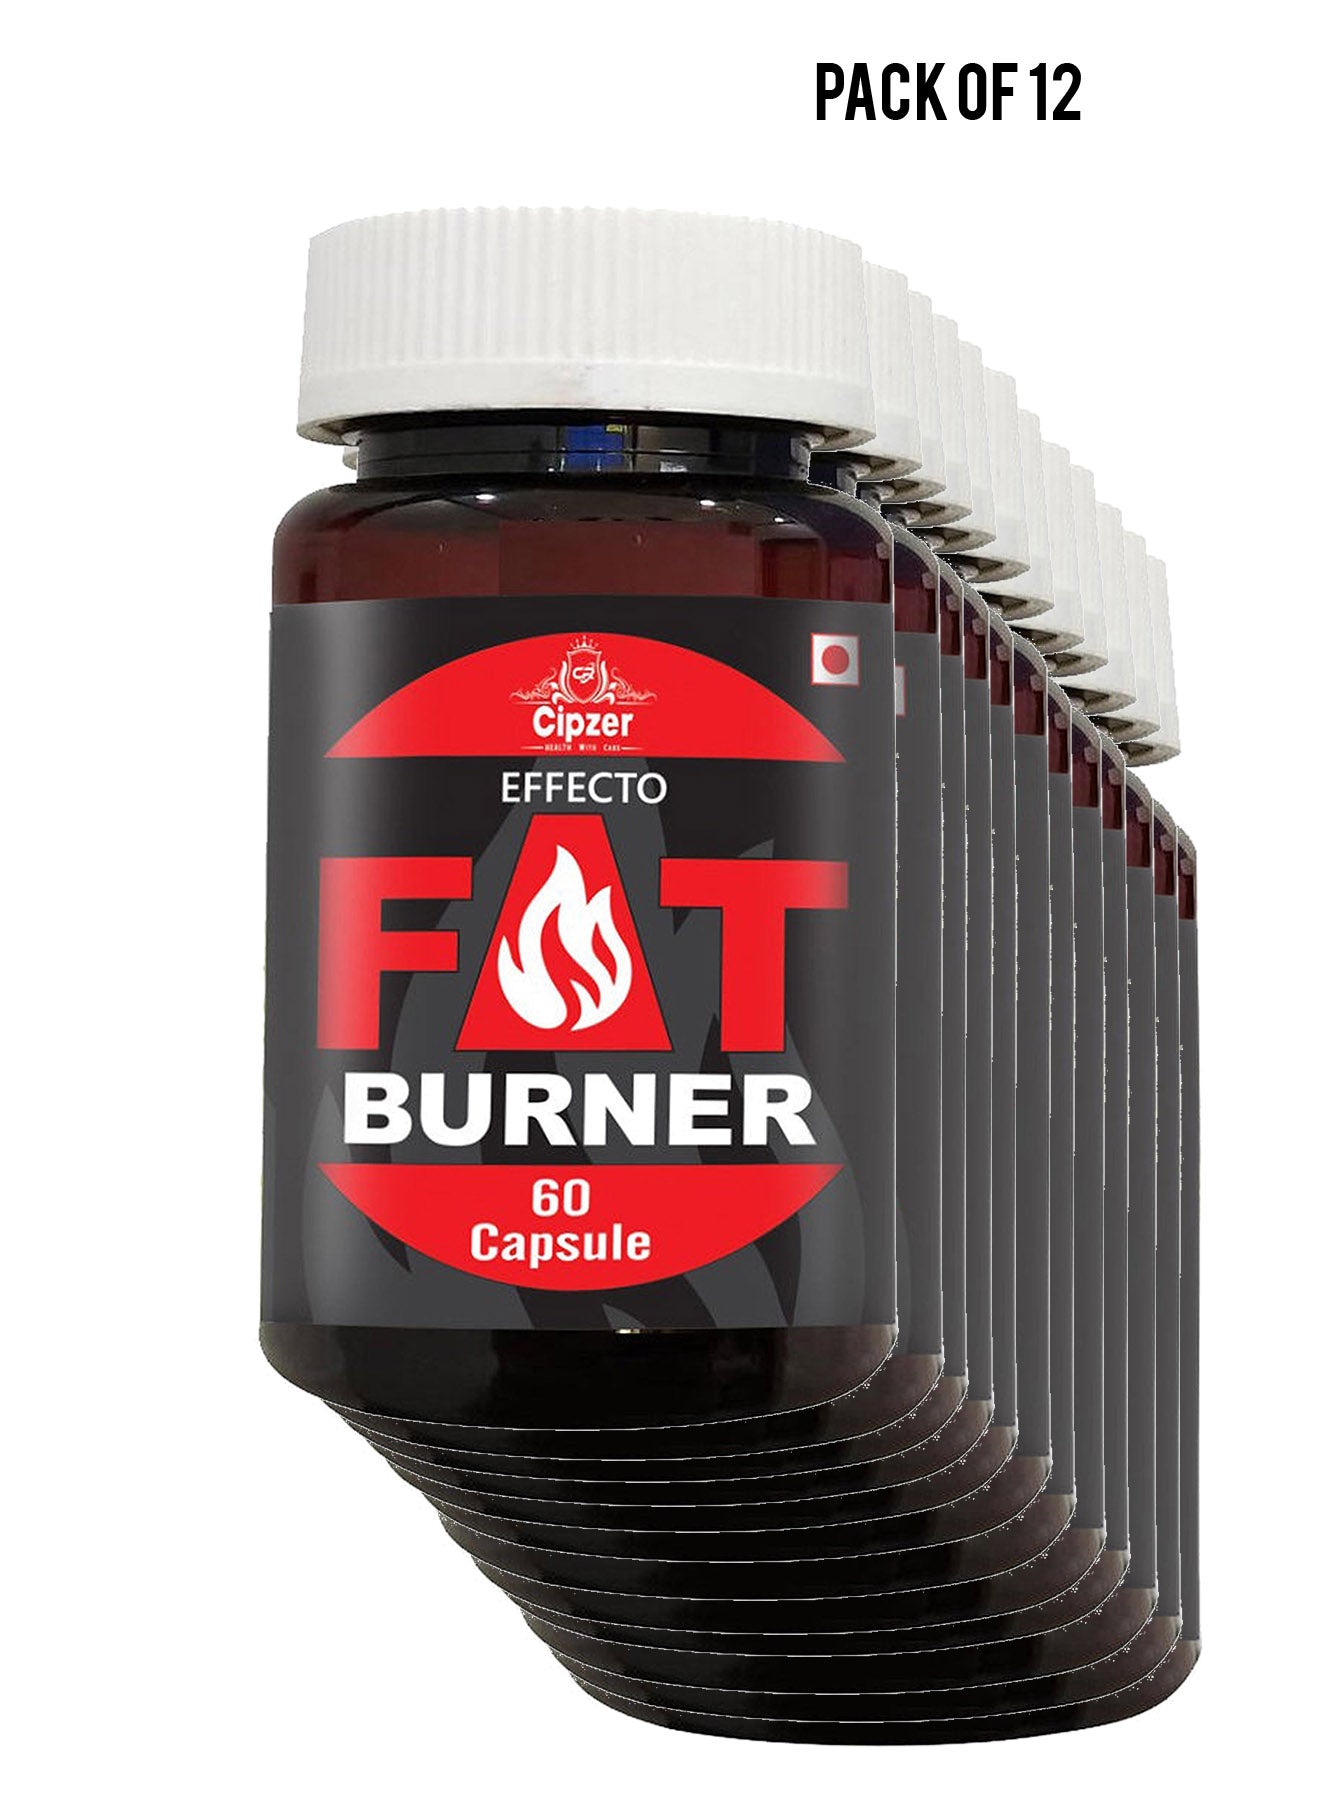 Cipzer Effecto FAT Burner 60 Capsules Value Pack of 12 